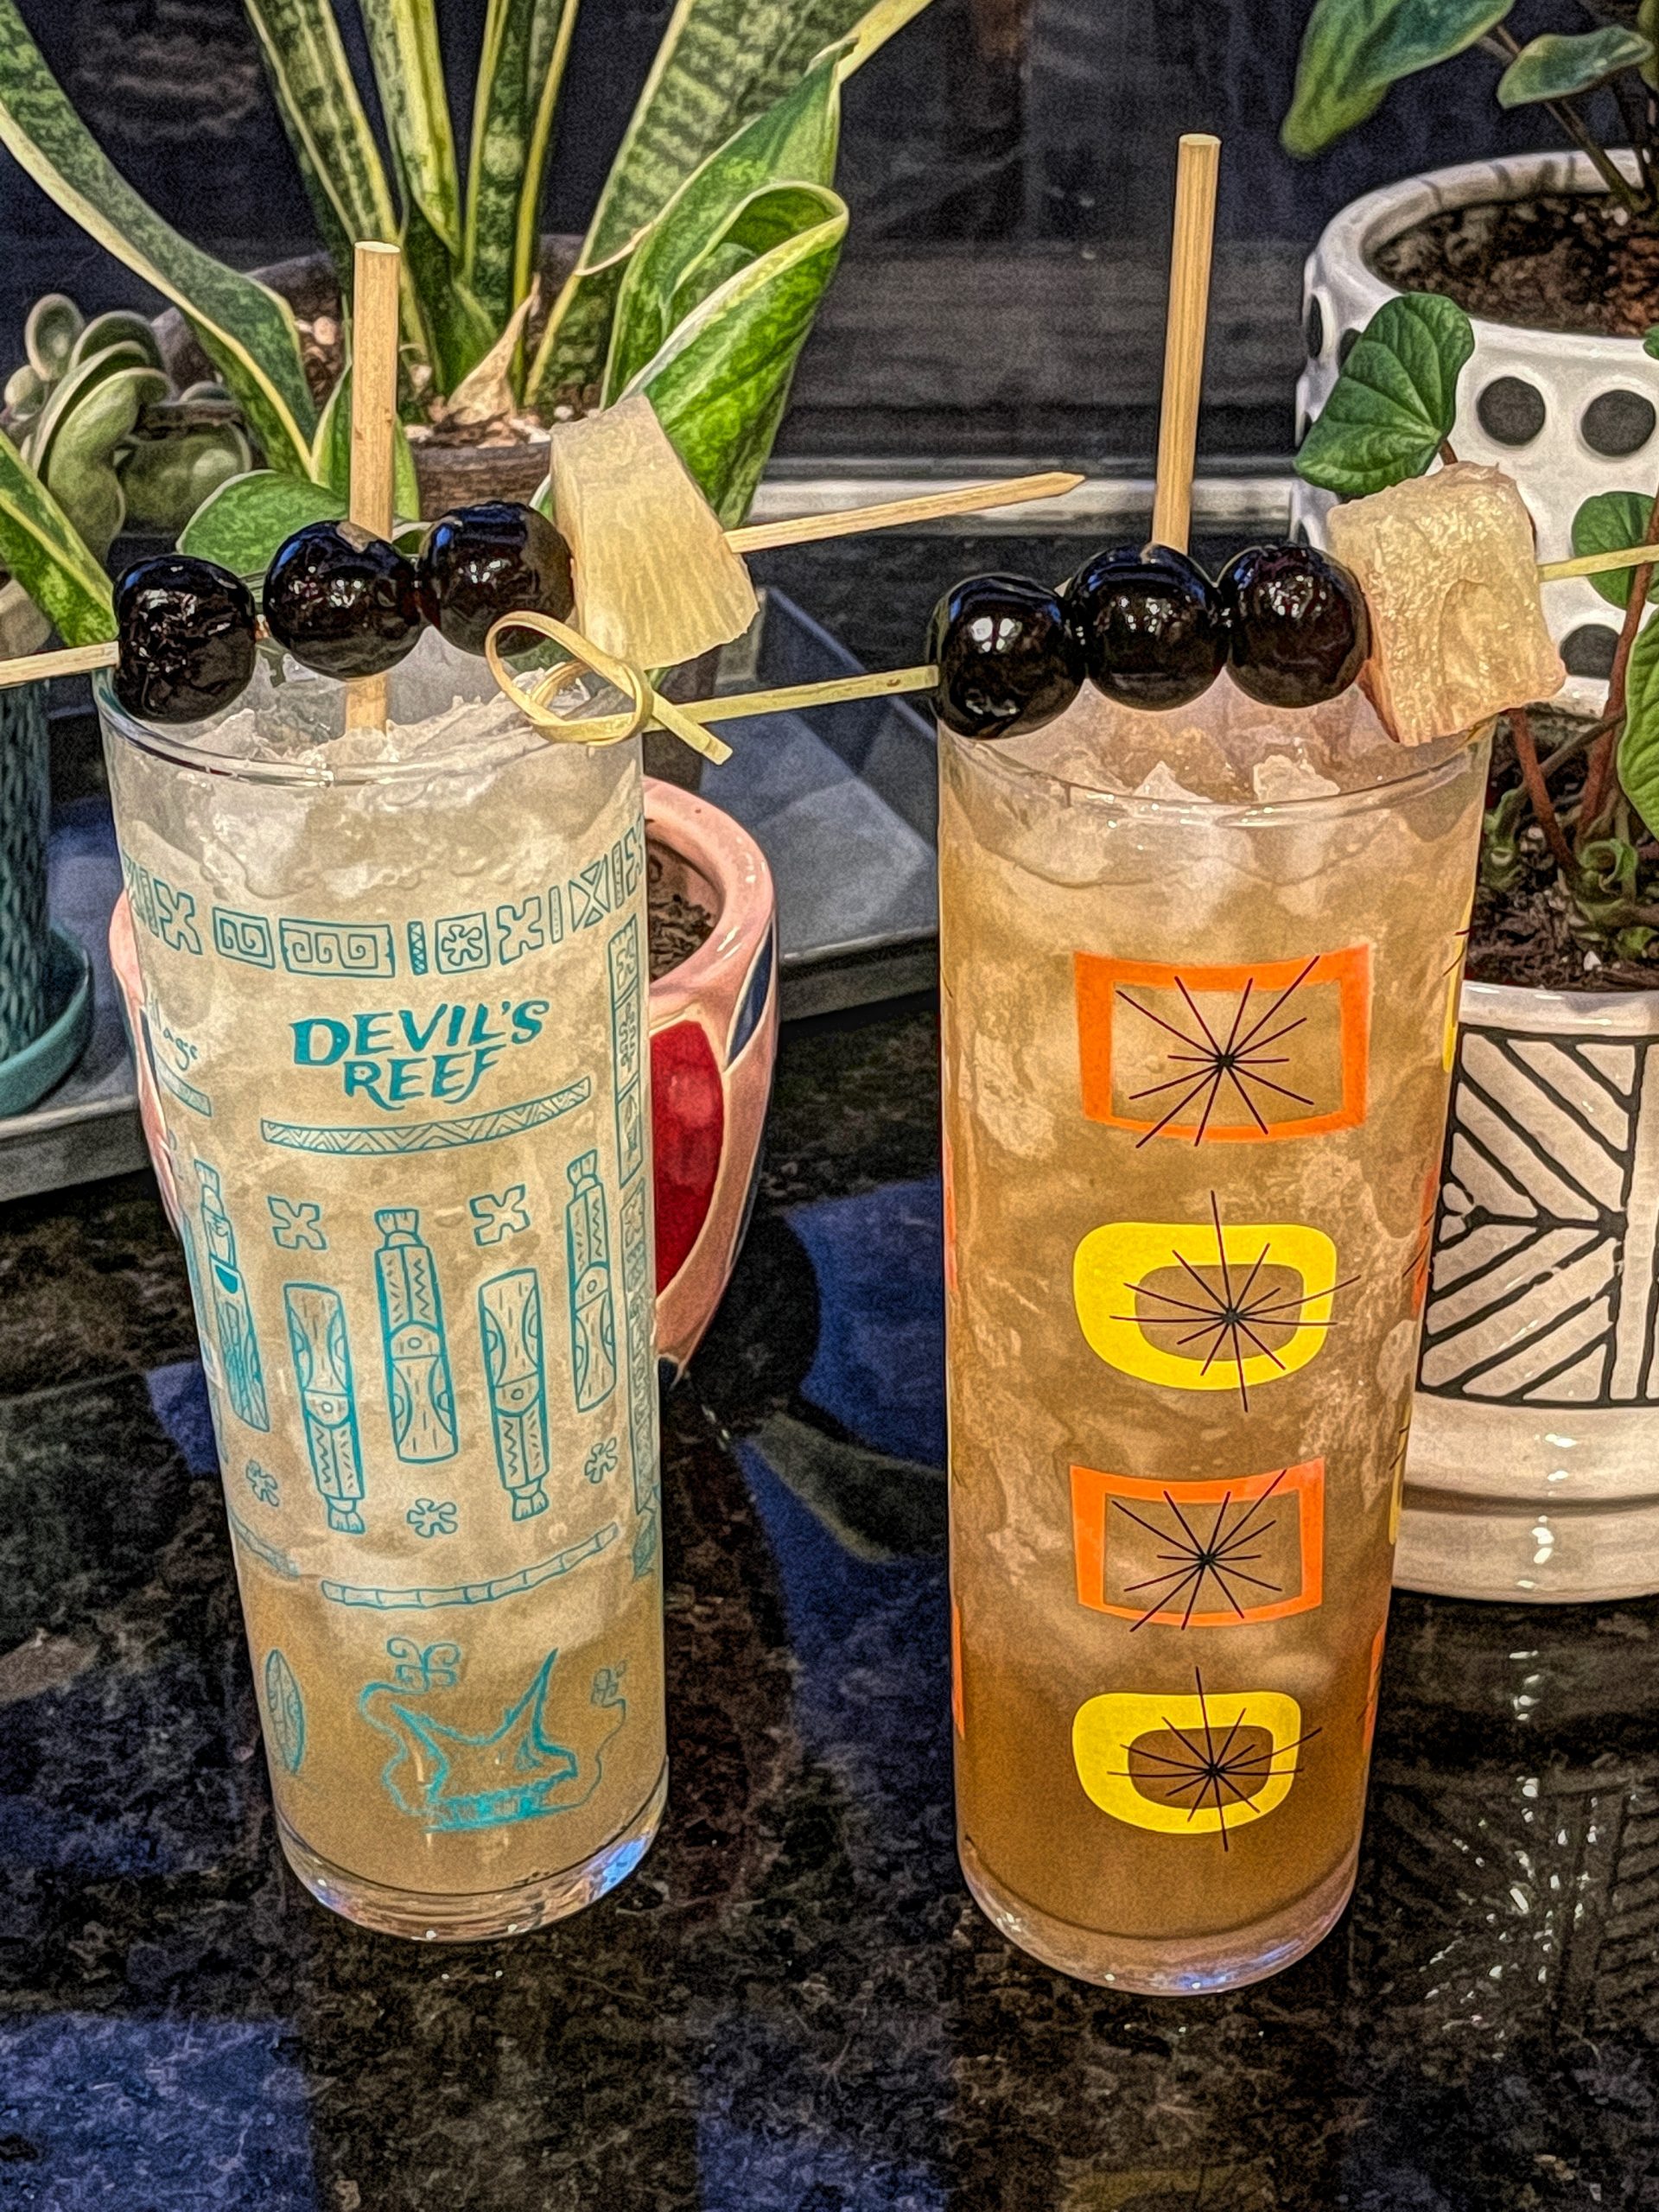 Three Dots & A Dash Cocktail Recipe